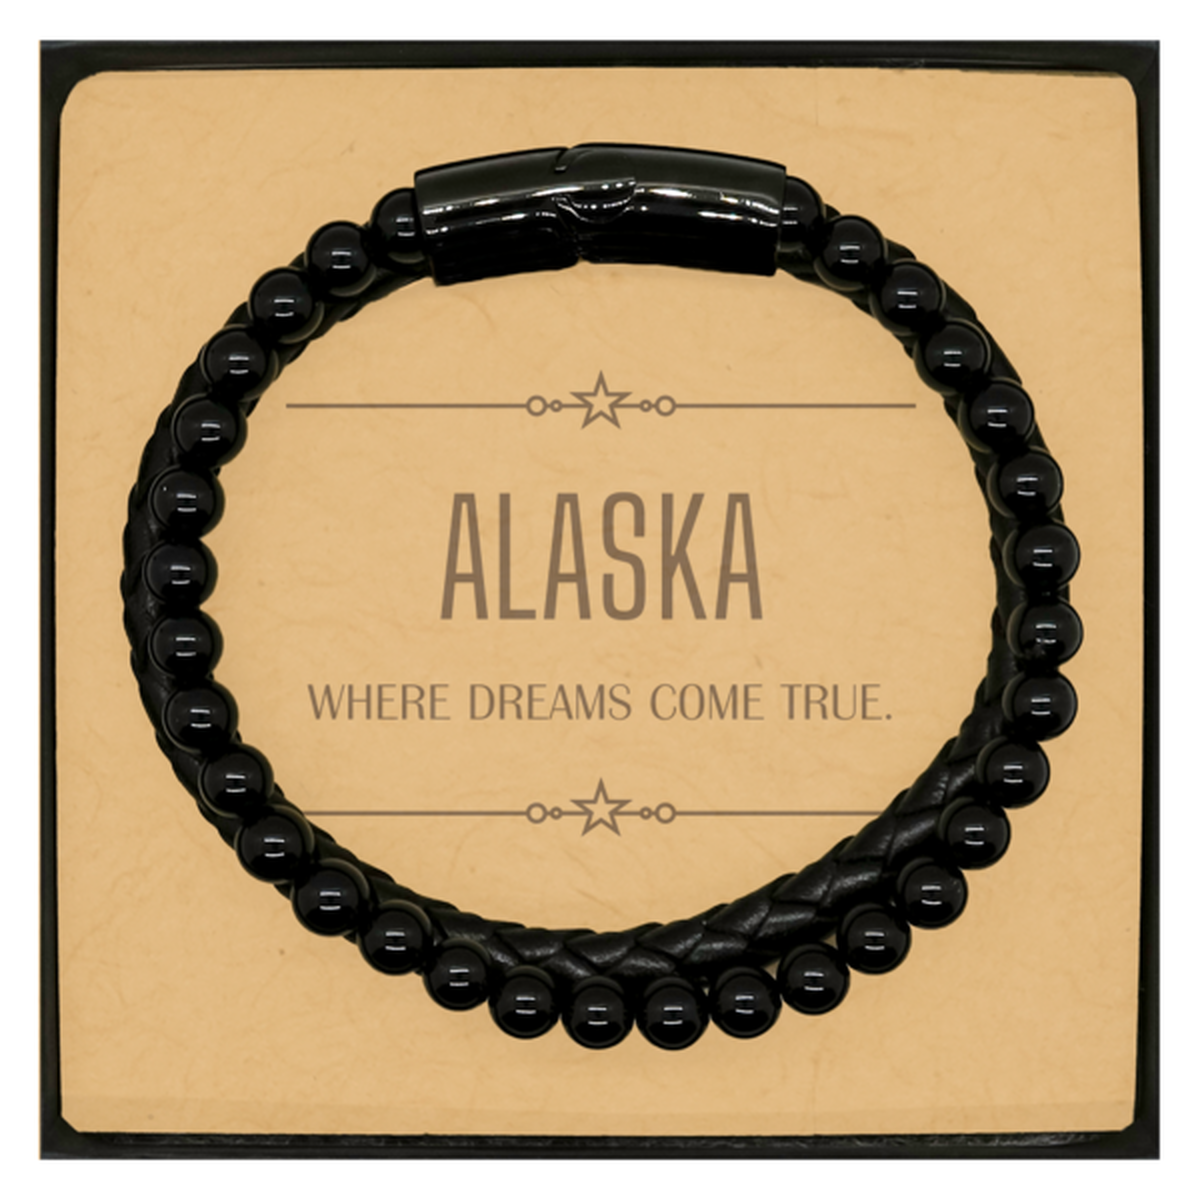 Love Alaska State Stone Leather Bracelets, Alaska Where dreams come true, Birthday Christmas Inspirational Gifts For Alaska Men, Women, Friends